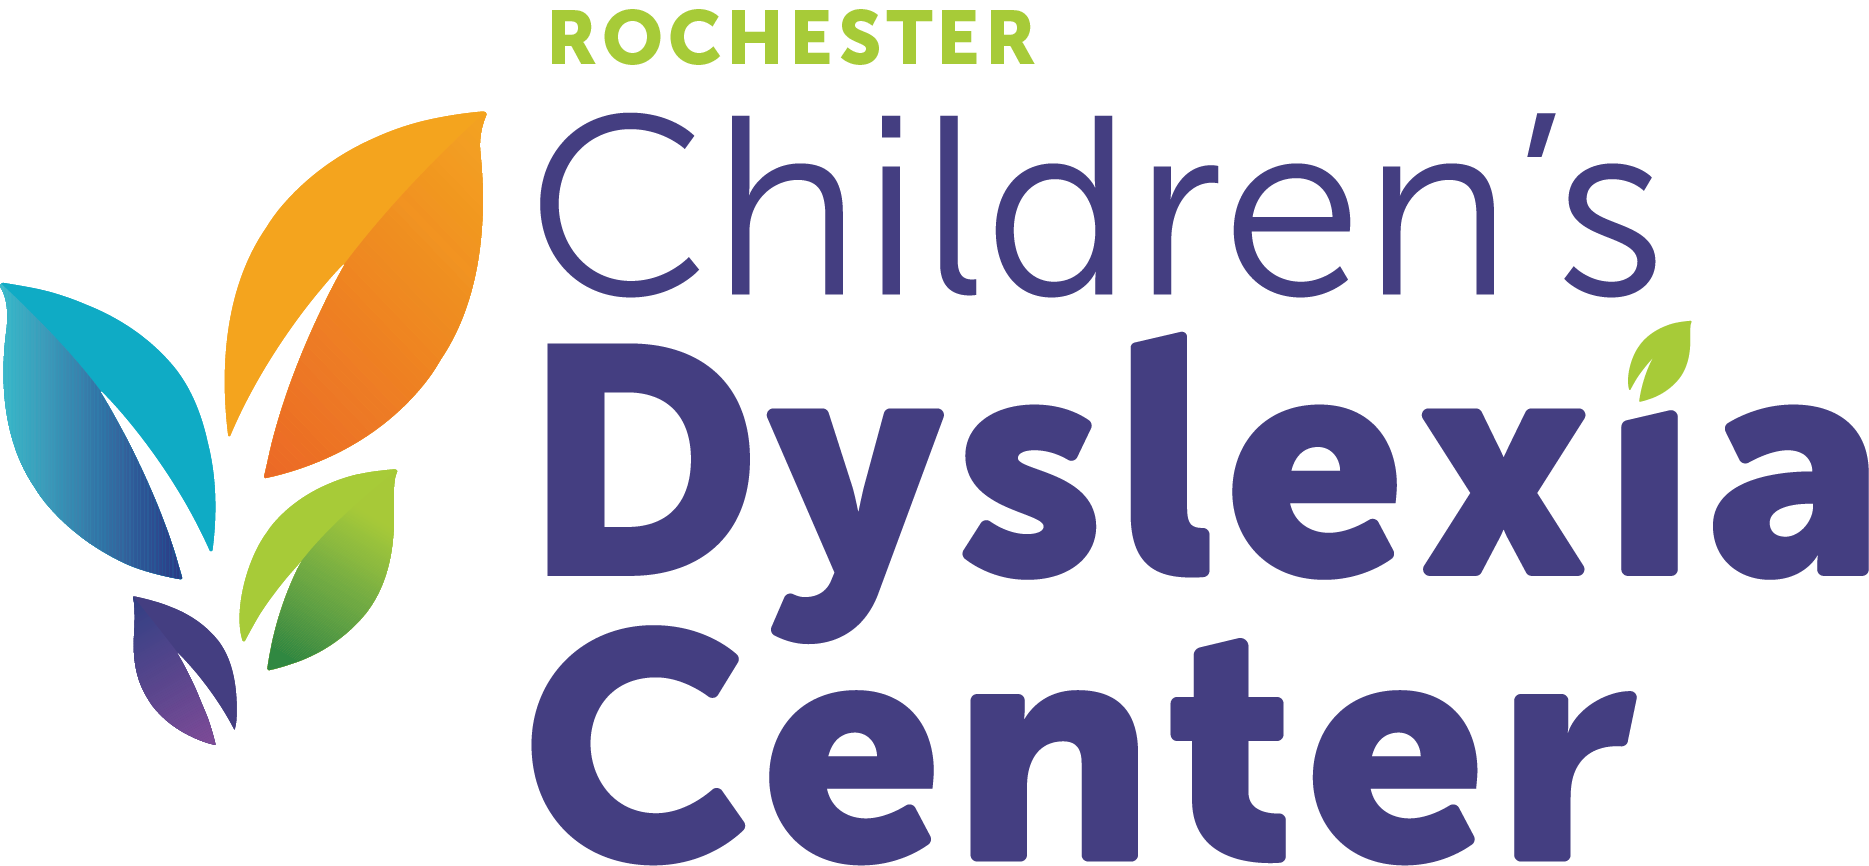 Rochester Children's Dyslexia Center